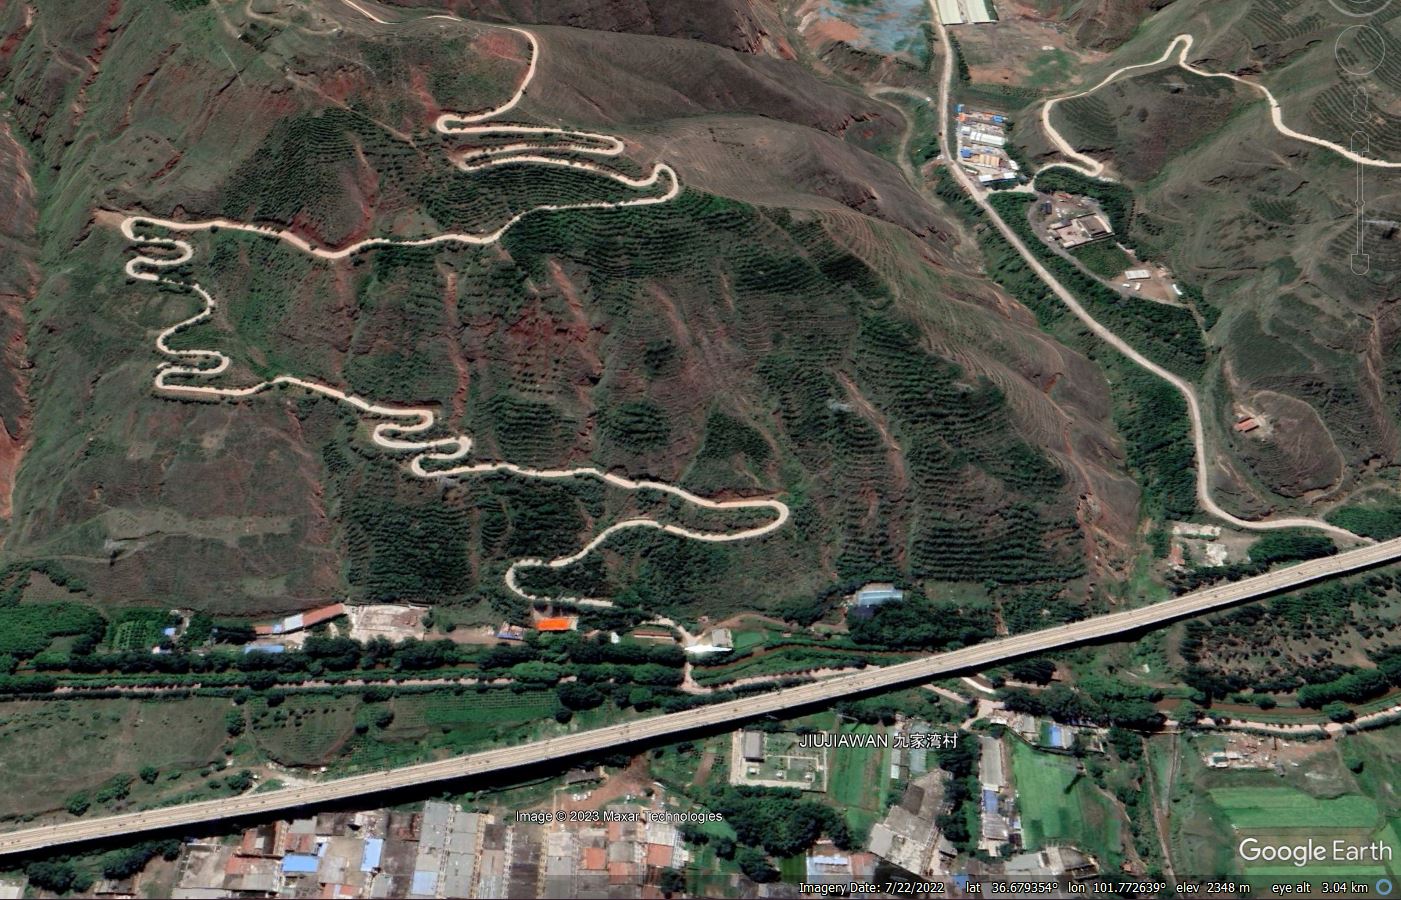 The site of the 22 September 2022 Jiujiawan landslide in China,